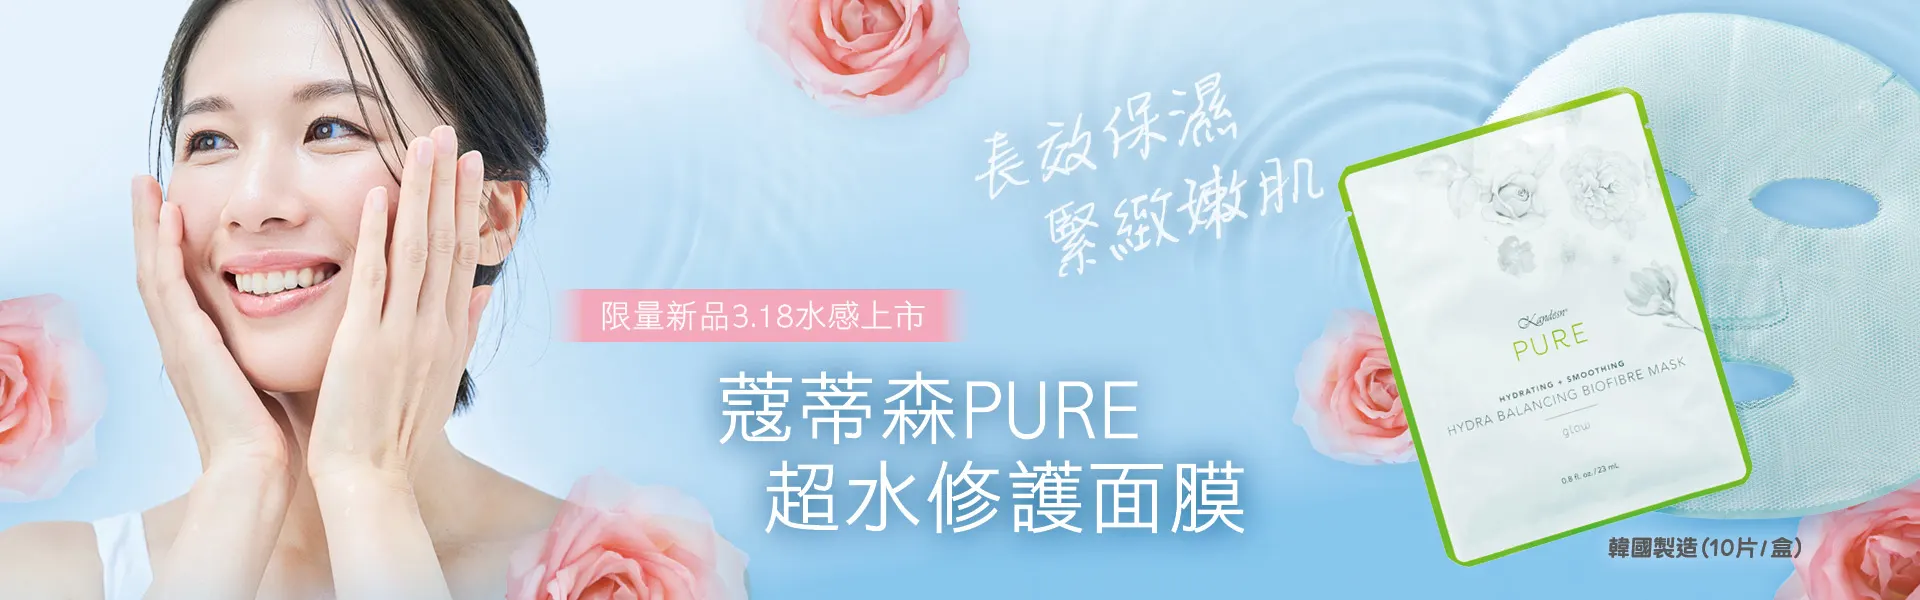 [HK] Kandesn-Pure-Mask-Banner web